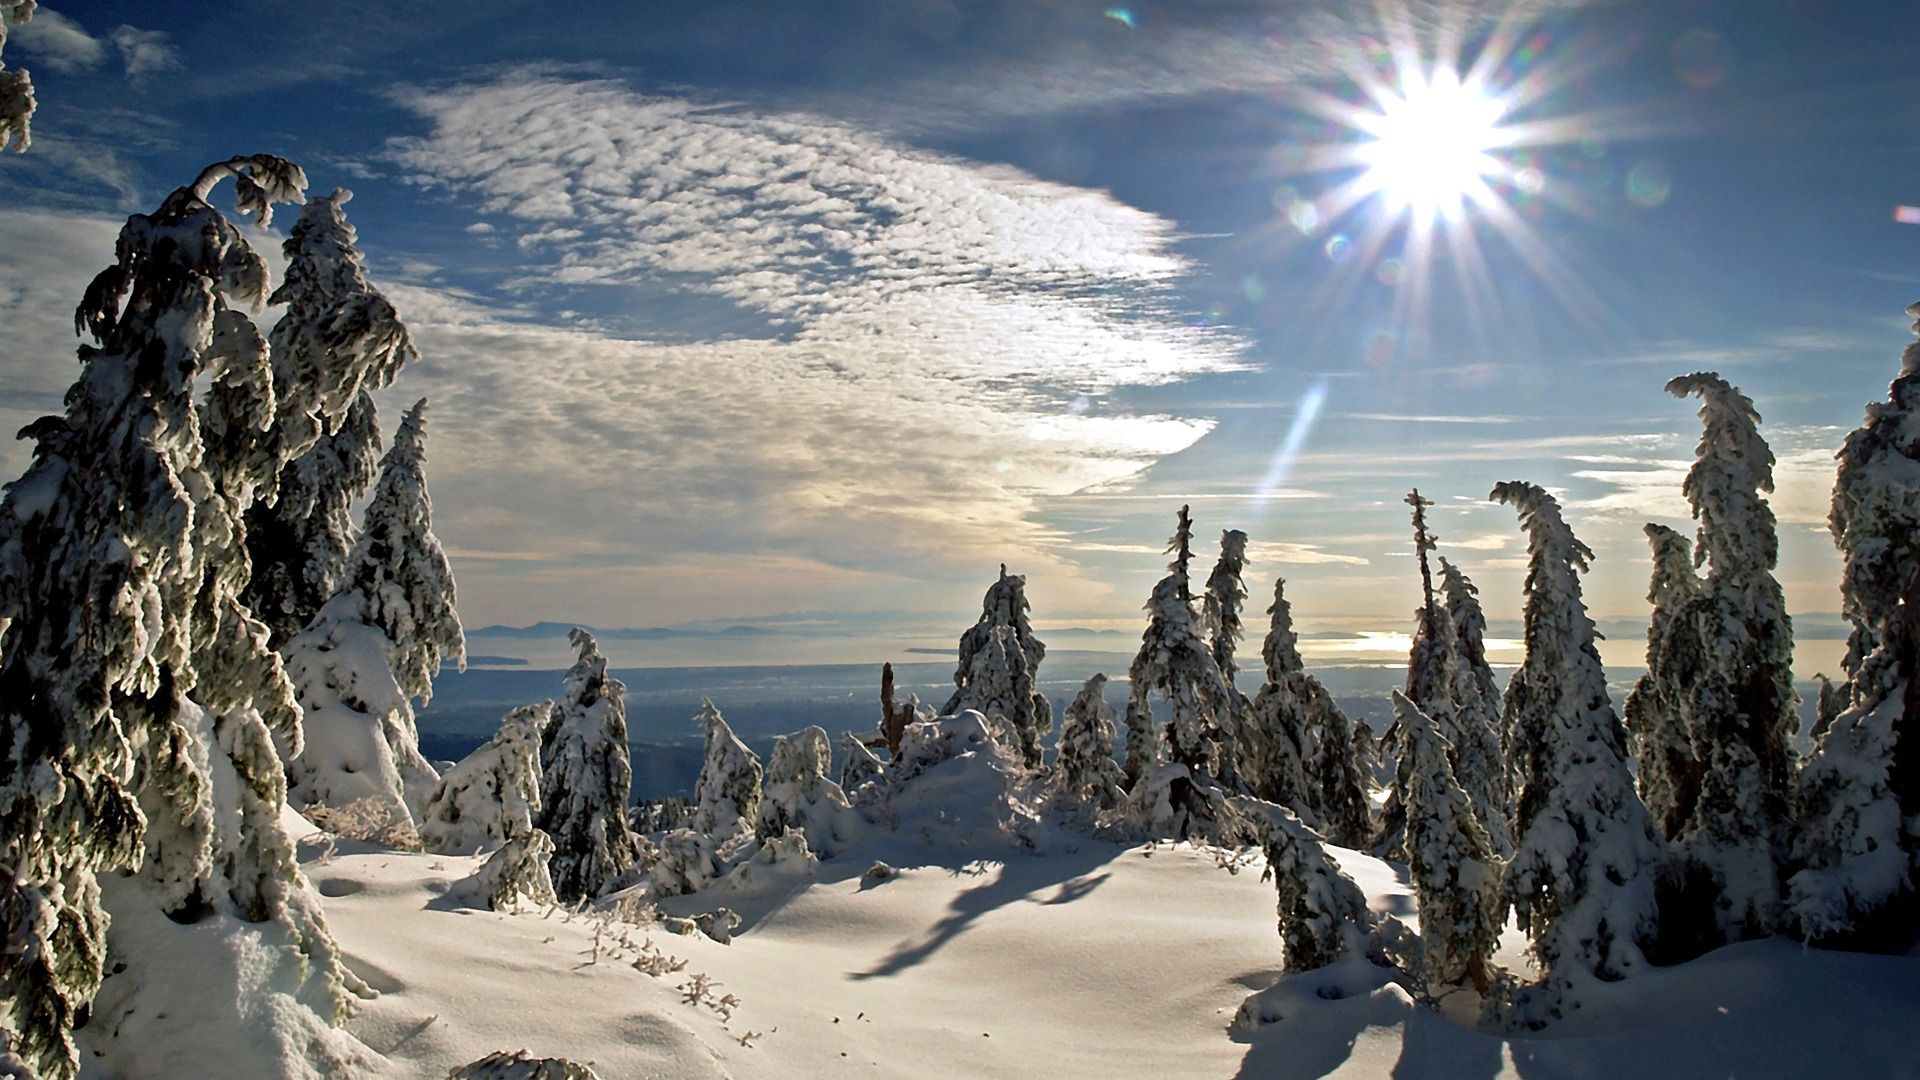 Winter Sun Wallpaper Winter Nature Wallpaper in jpg format for free download